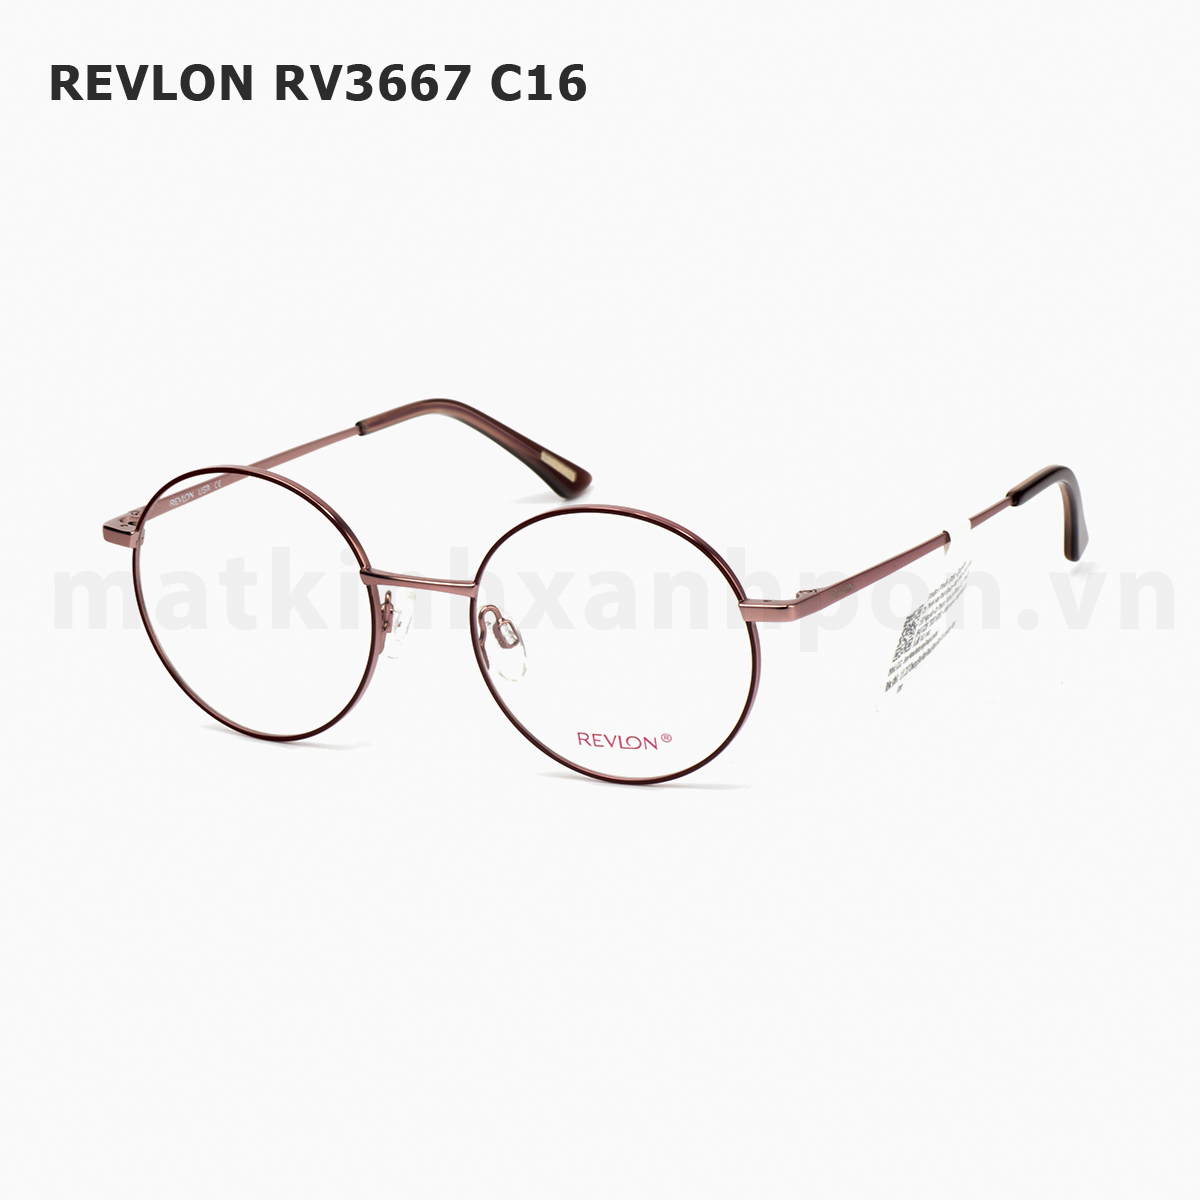 Revlon RV3667 C16